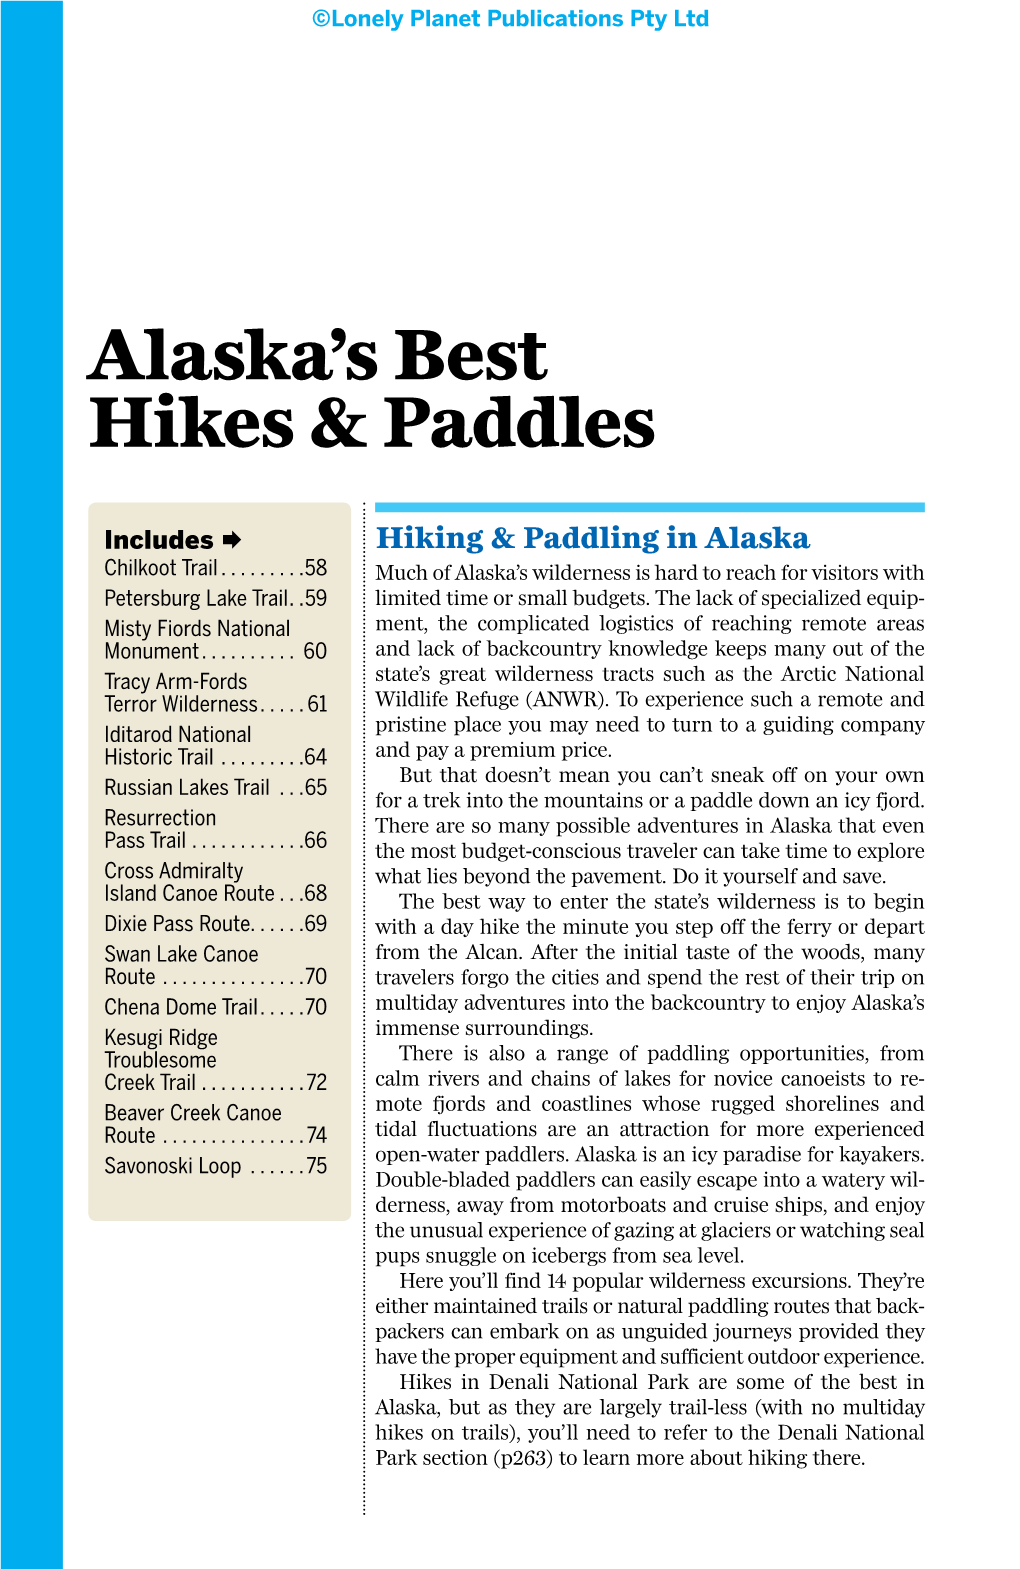 Alaska's Best Hikes & Paddles